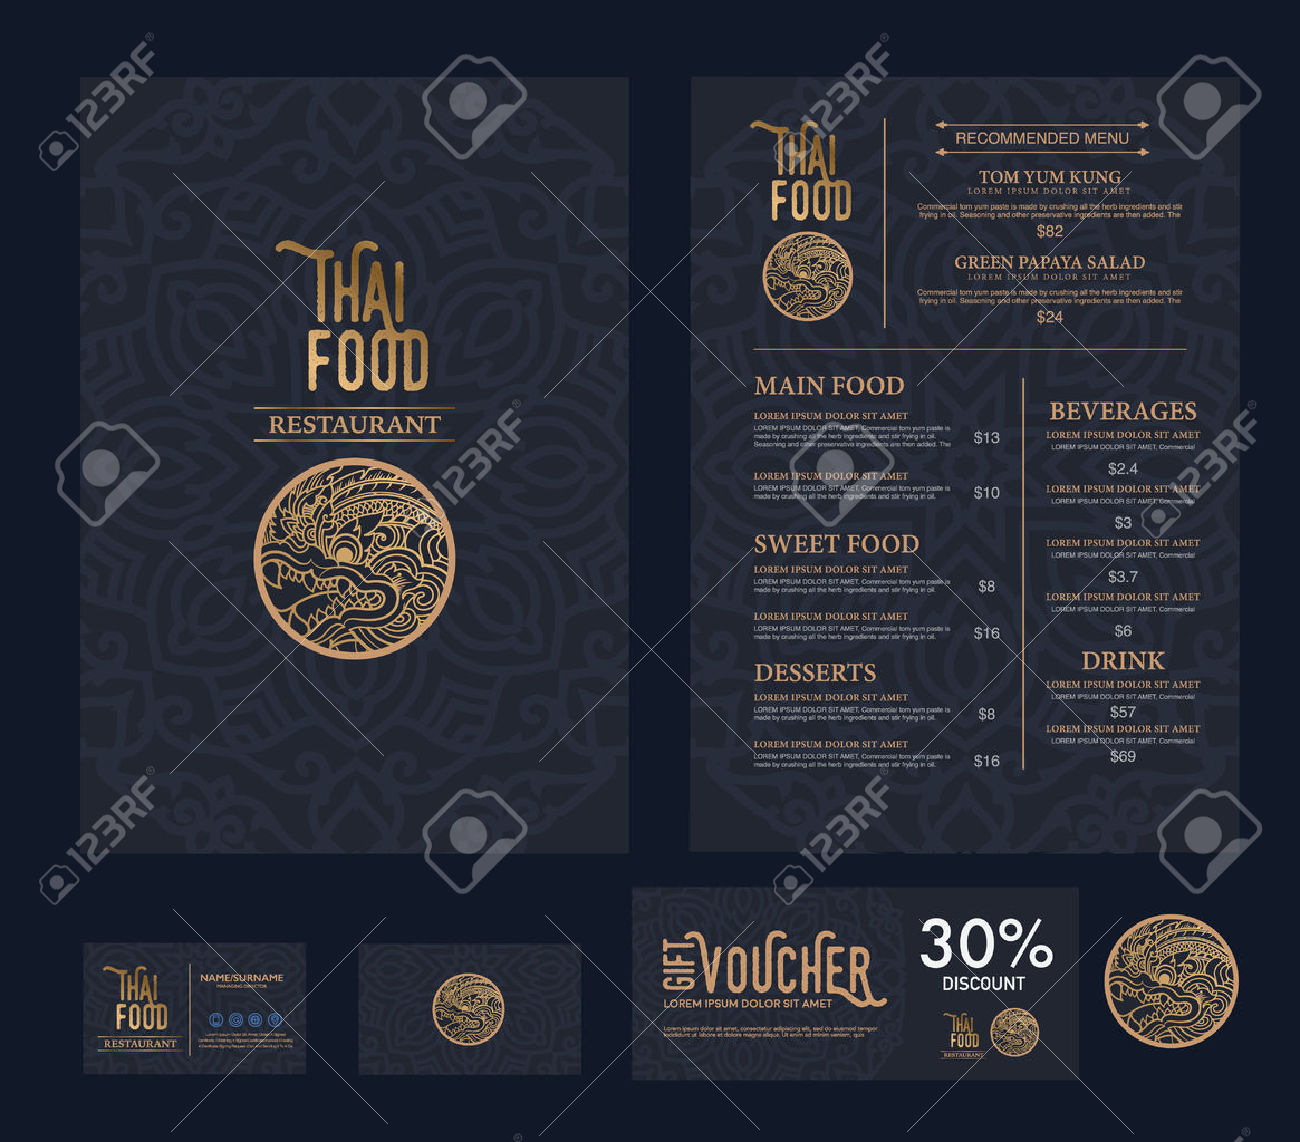 7+ Food Menu Designs | Design Trends - Premium PSD, Vector Downloads